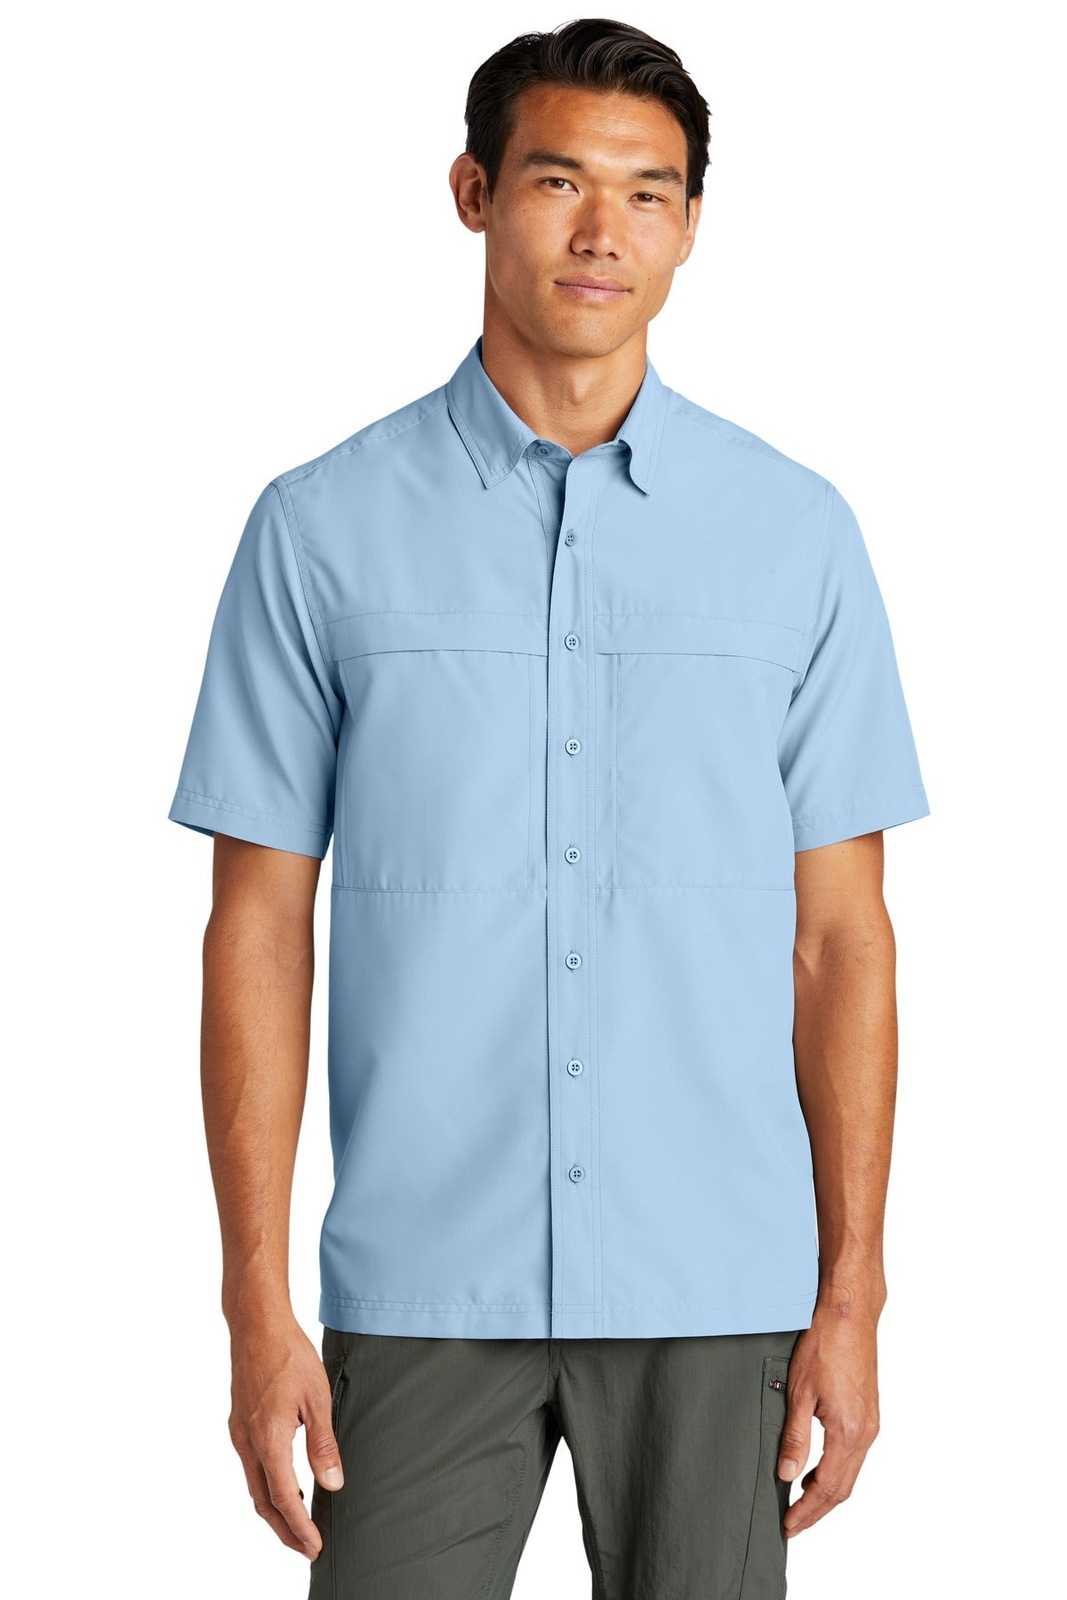 Port Authority W961 Short Sleeve UV Daybreak Shirt - Light Blue - HIT a Double - 1